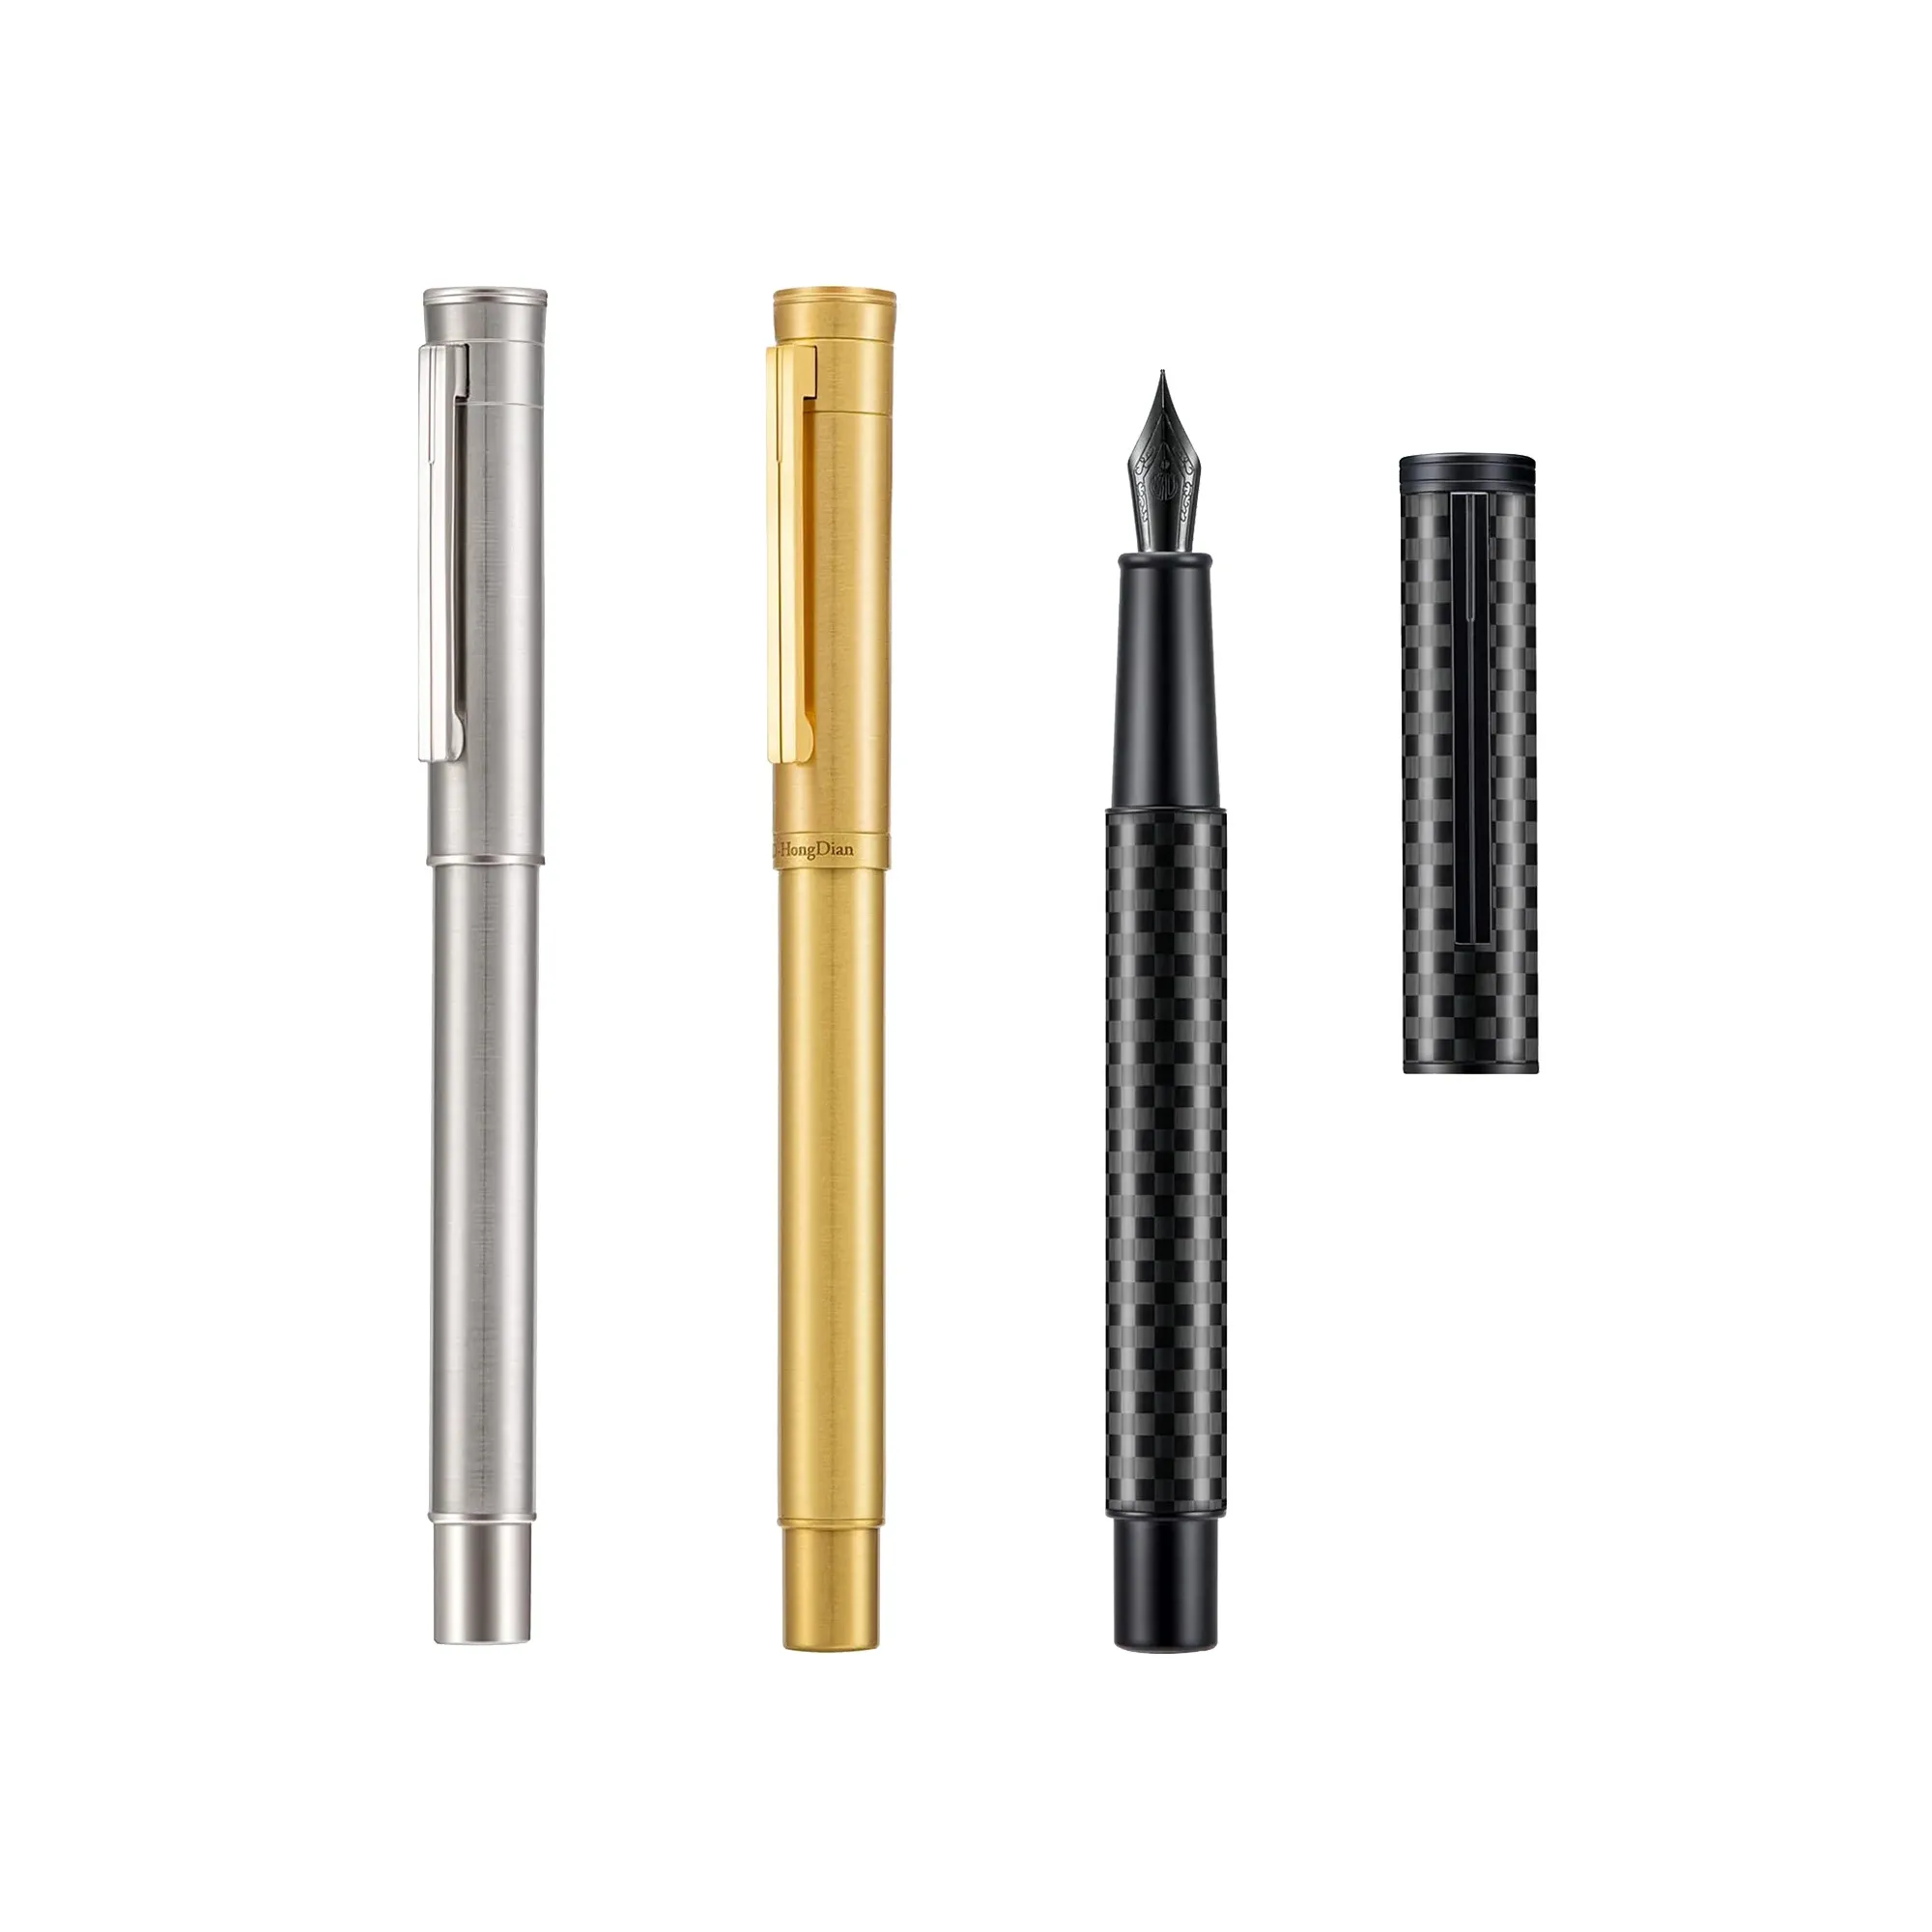 Pennor Hongdian 1861 Forest Fountain Pen EF/F/M/Bent Nib, Classic Carbon Fiber, Metal Smooth Writing Pen Set